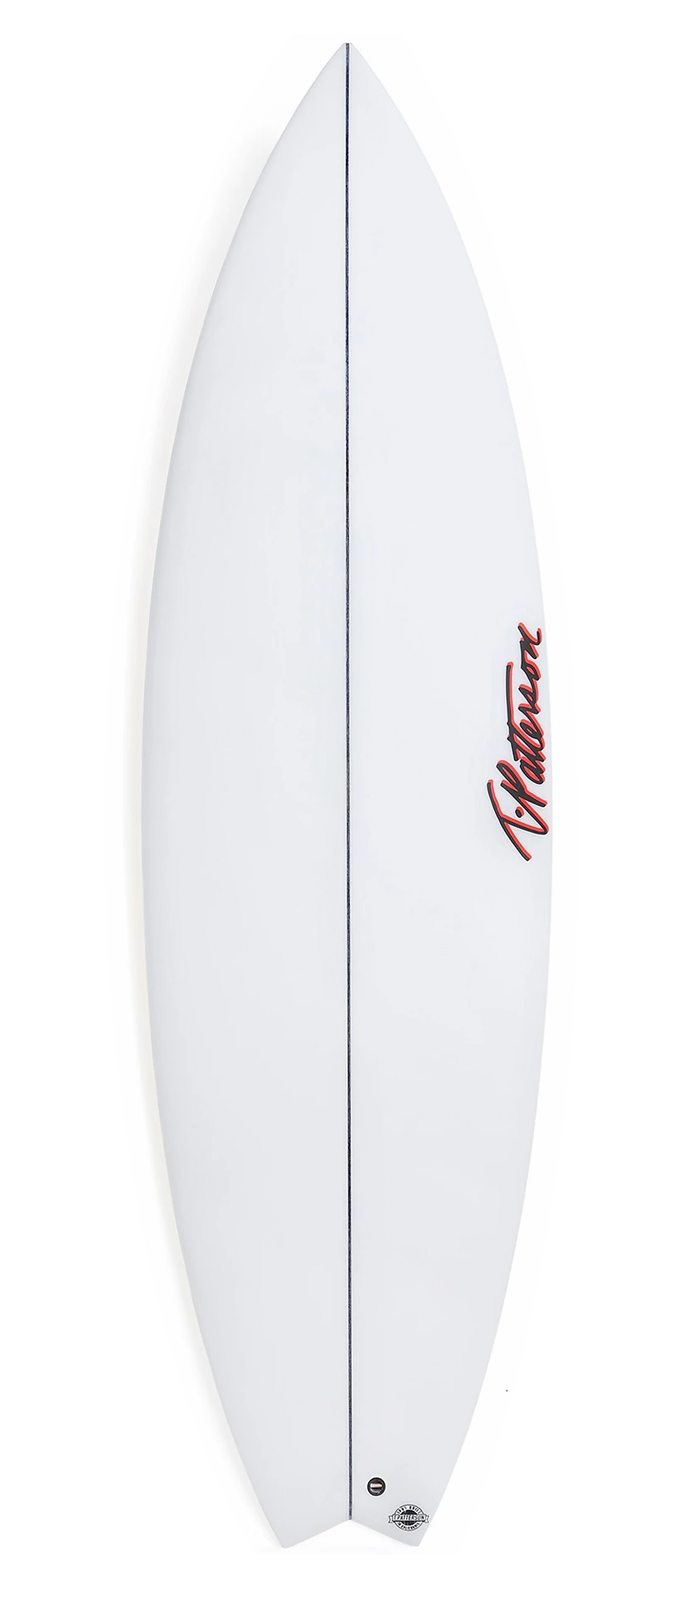 GAS PEDAL surfboard model deck